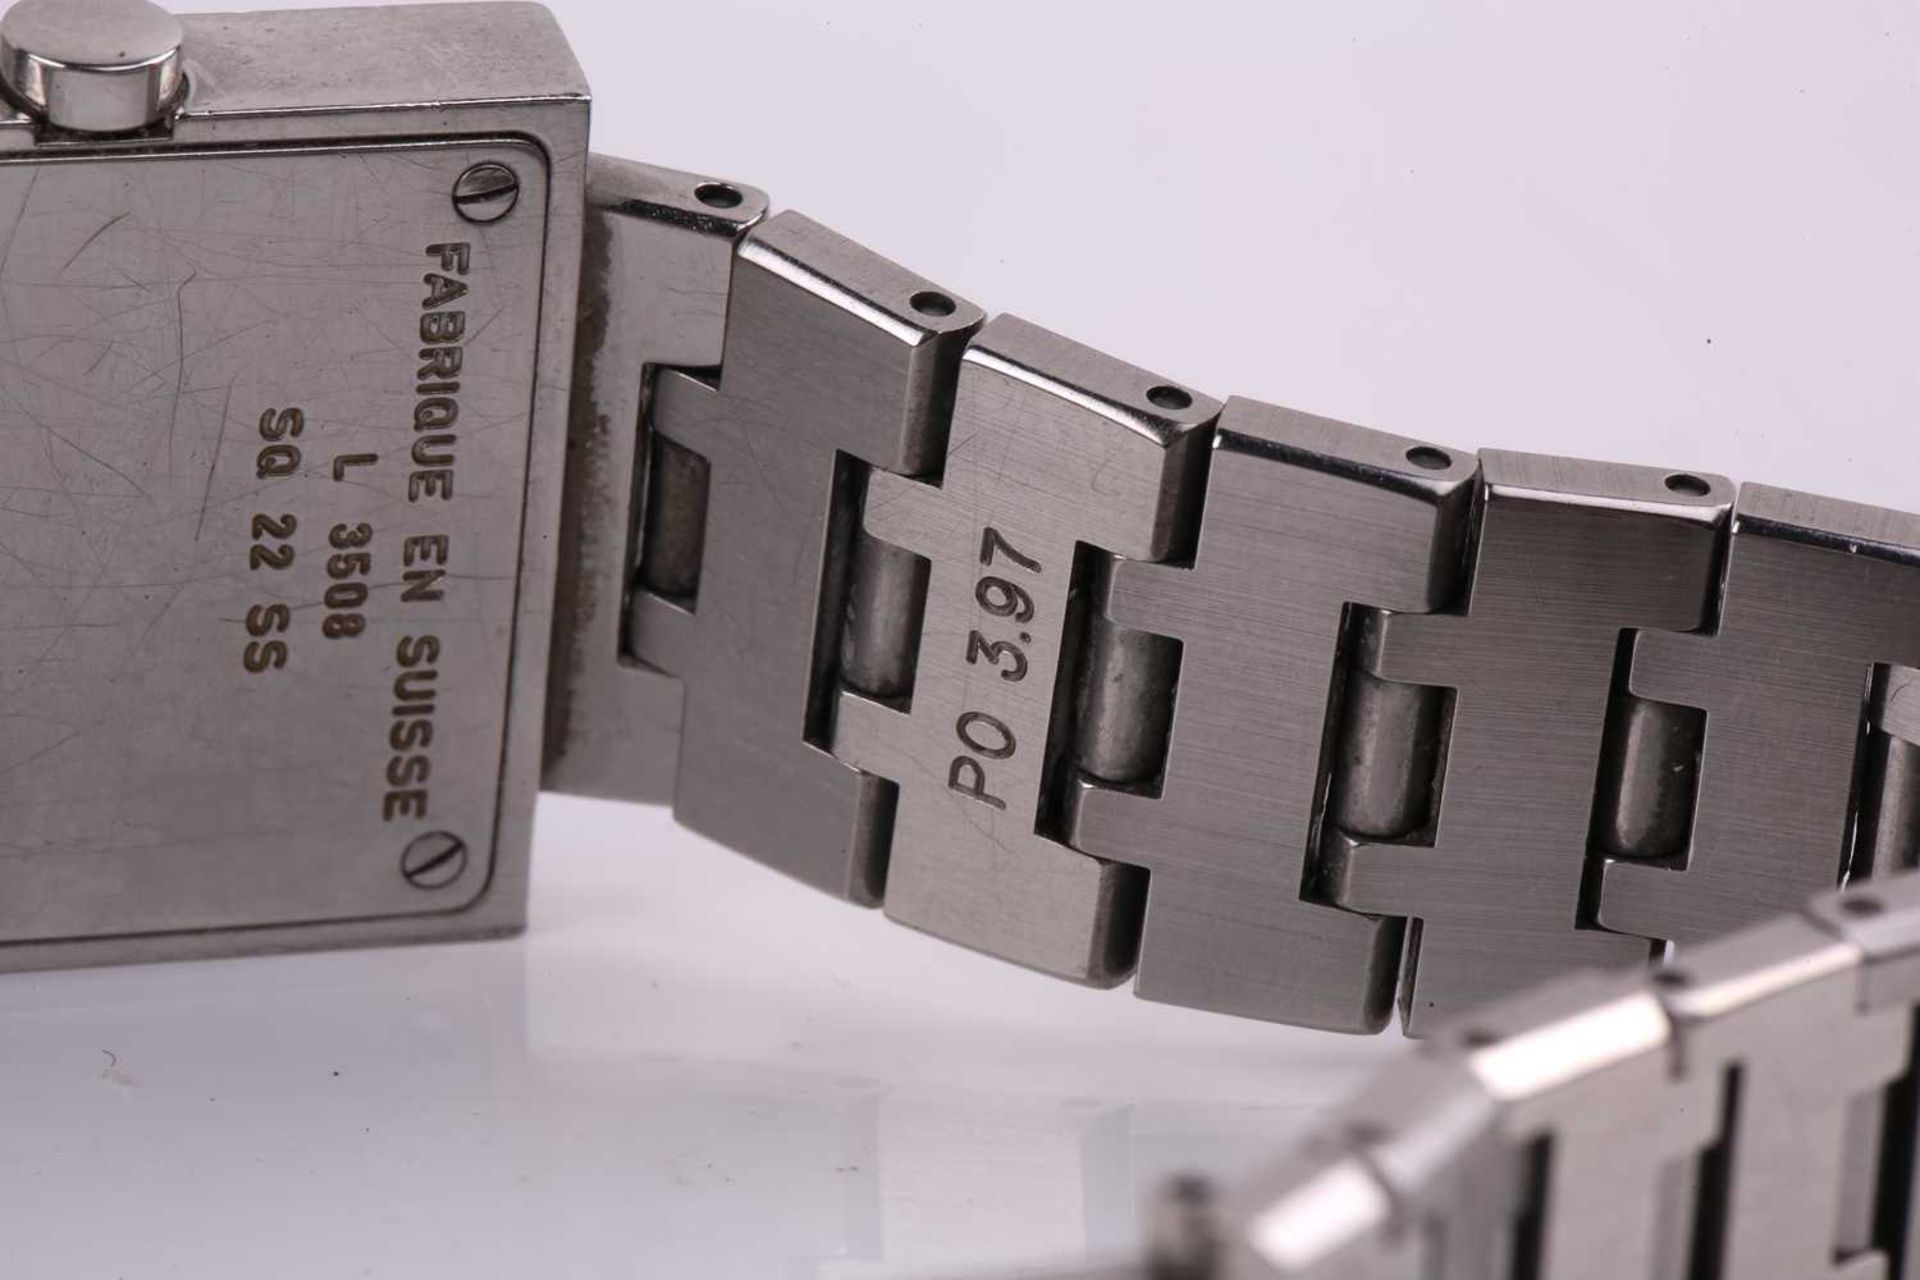 A Bulgari - Bvlgari Quadrato Ref. SQ22SS lady's wristwatch, featuring a Swiss-made quartz movement - Image 8 of 12